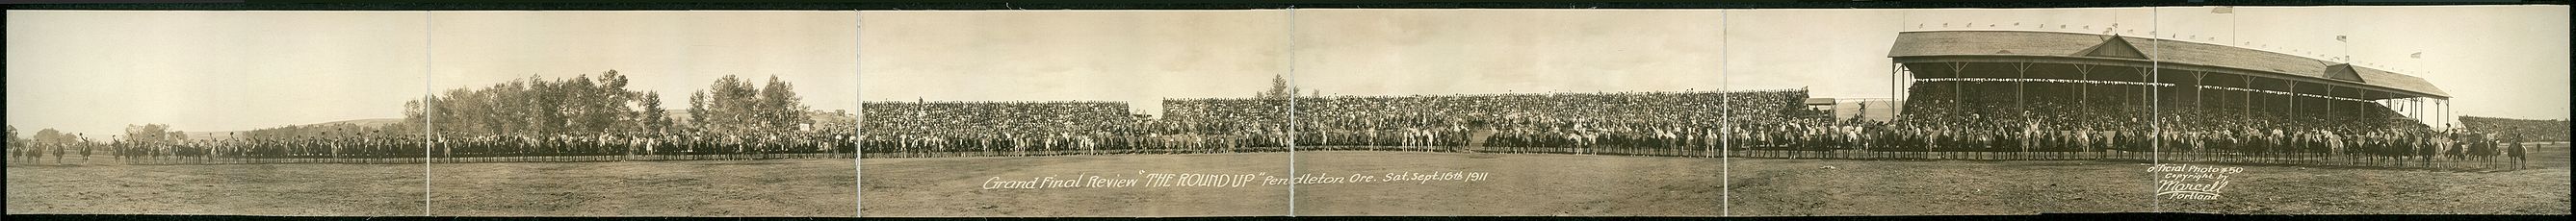 Grand Final Review - 1911 - Pendleton Oregon roundup rodeo - panorama.jpg